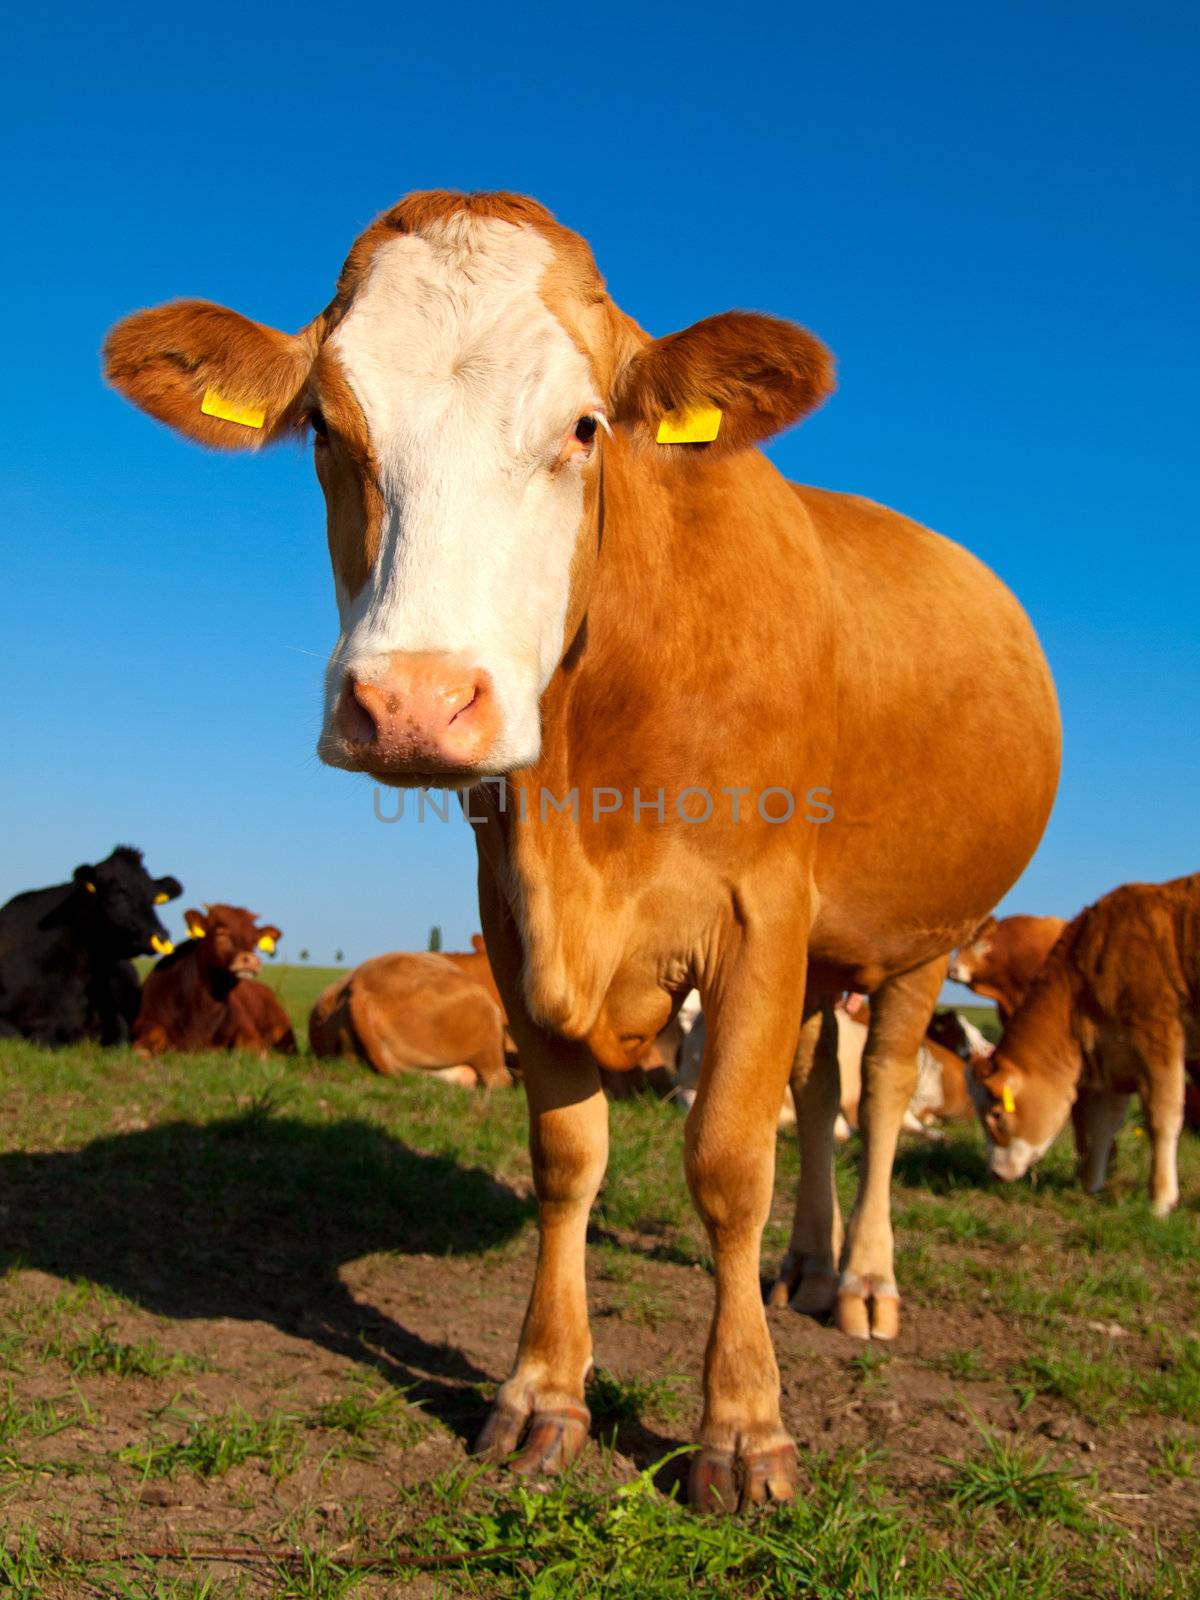 Cow 